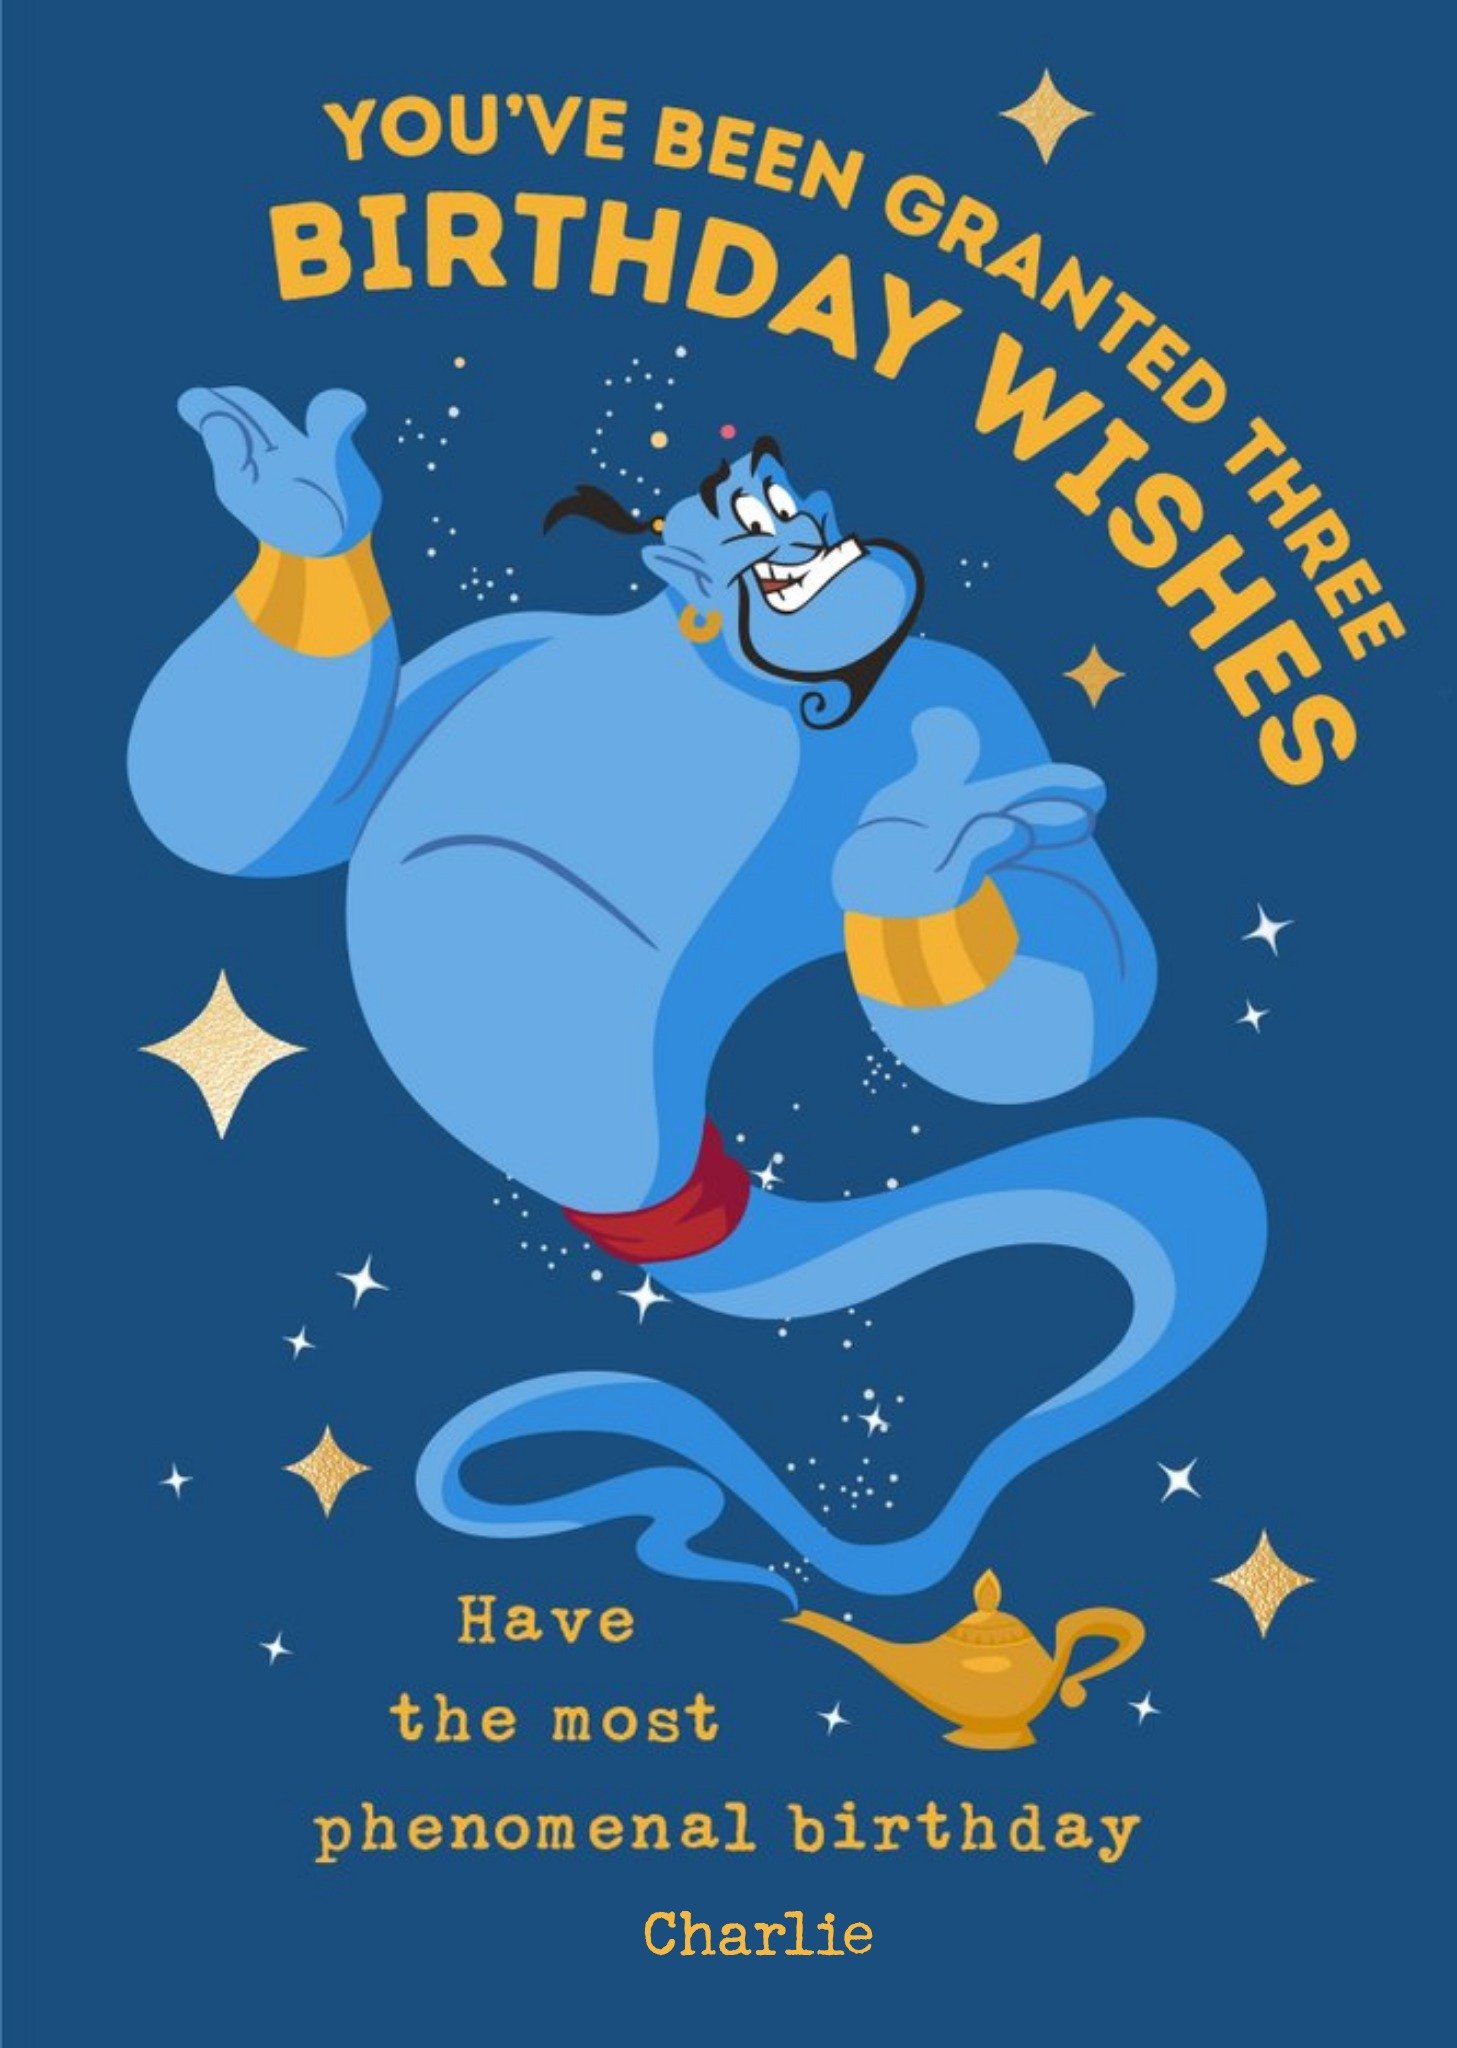 Disney Aladdin Birthday Card - Genie - Granted Three Birthday Wishes Birthday Card, Large